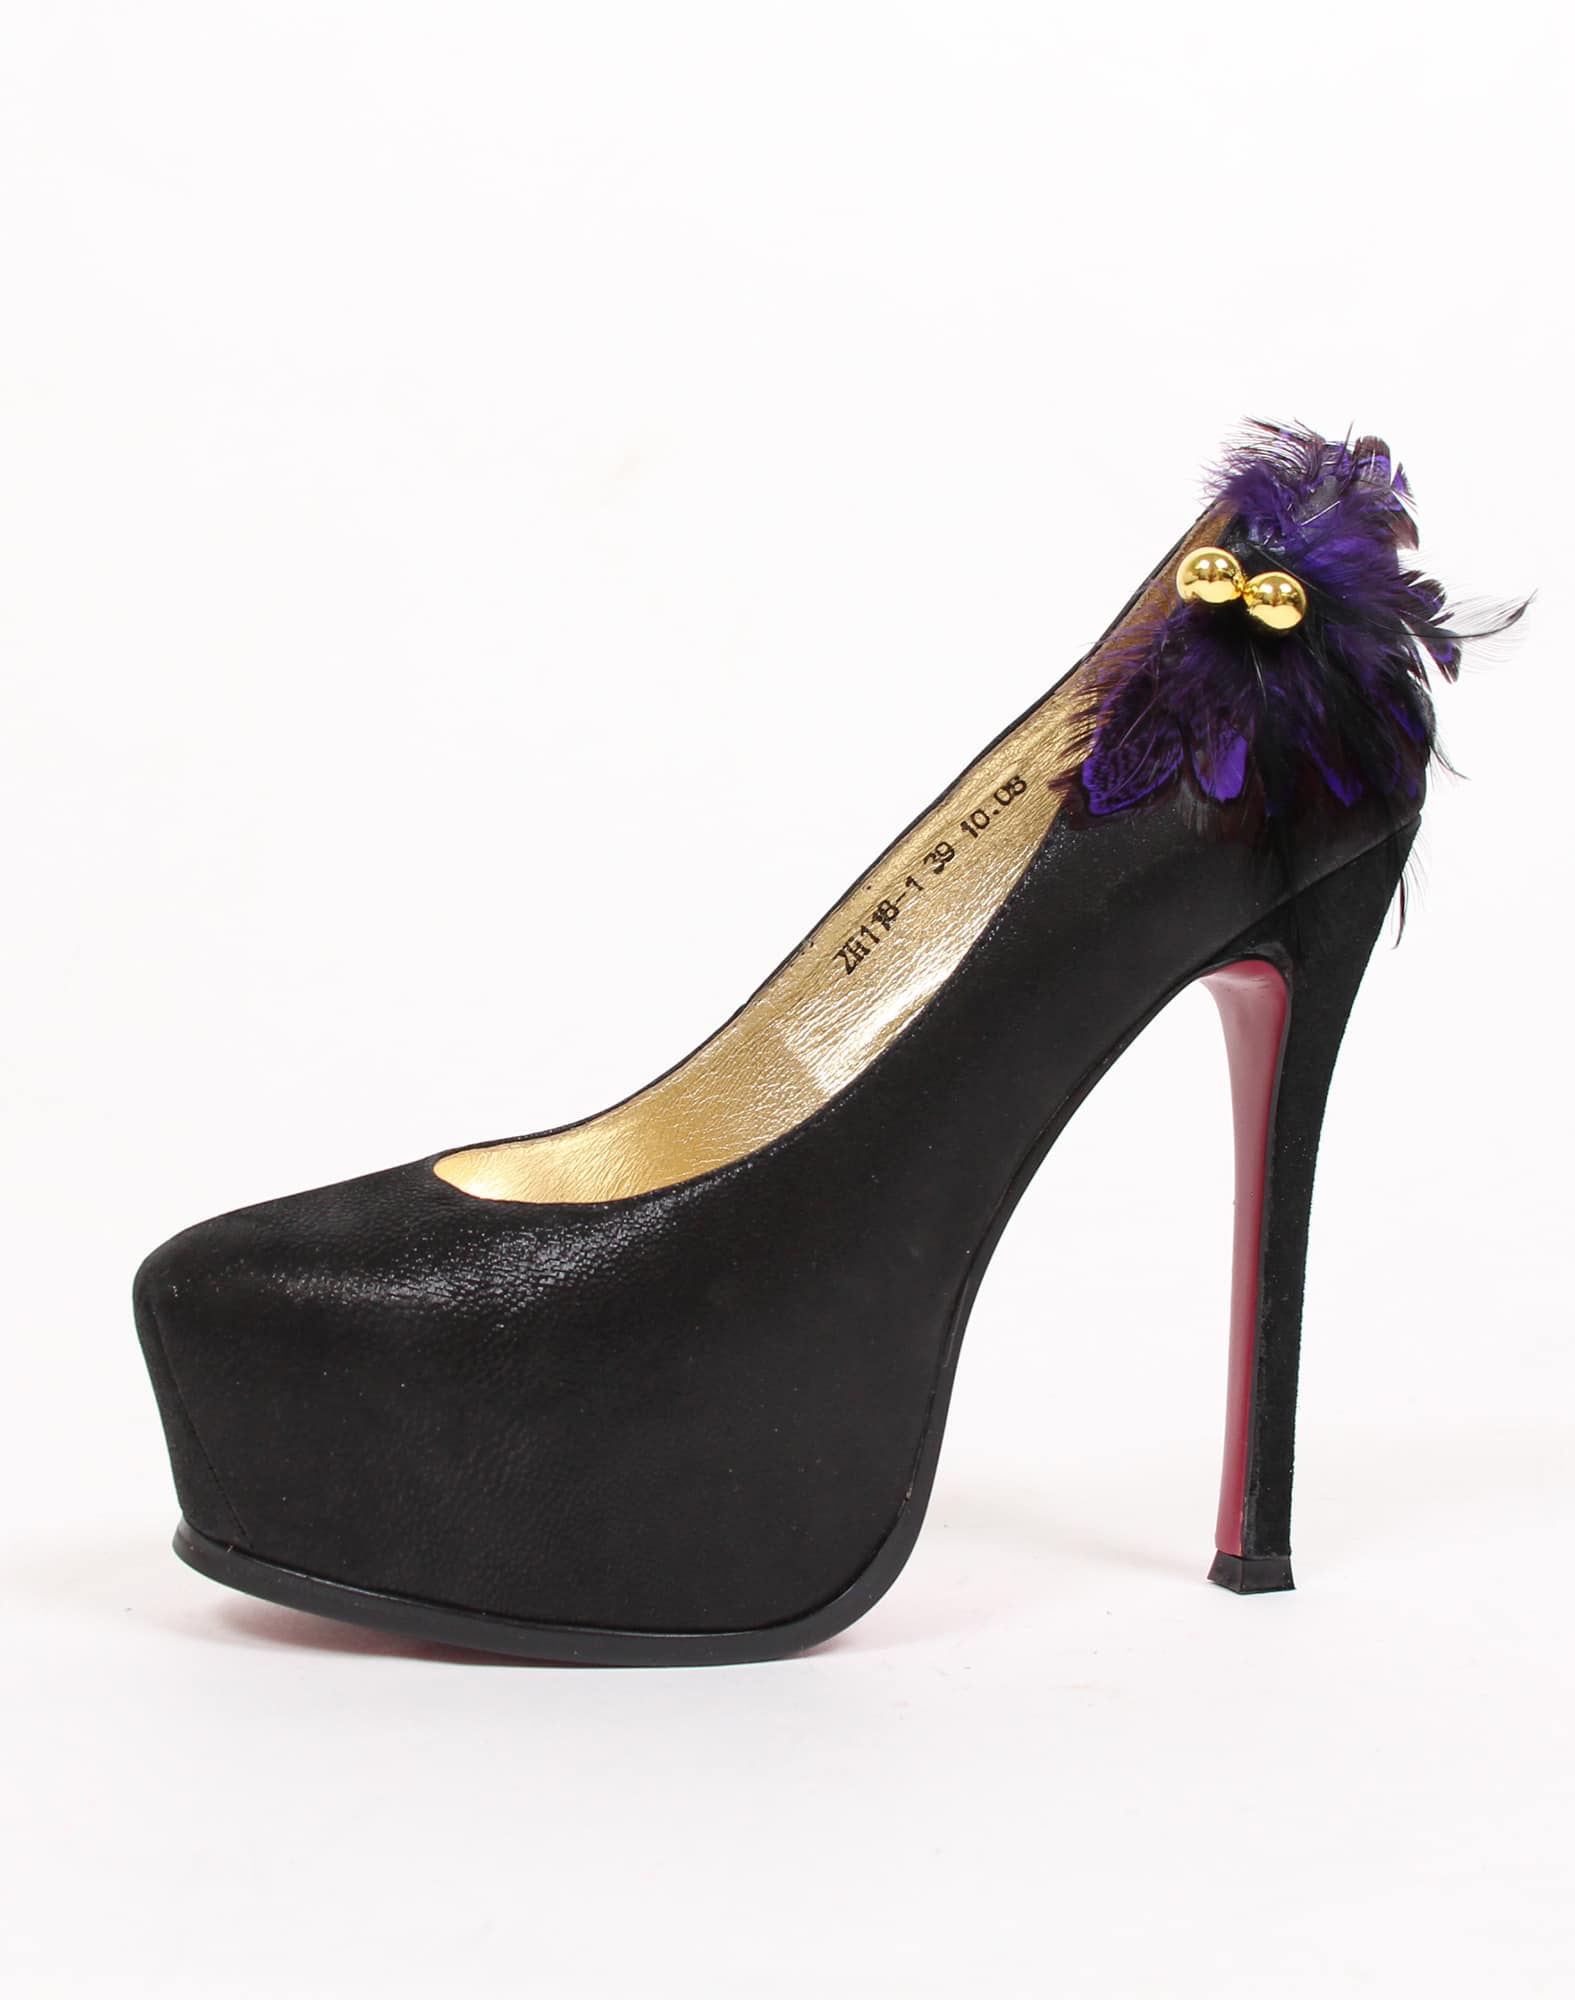 Minette - Black Platform heels with 